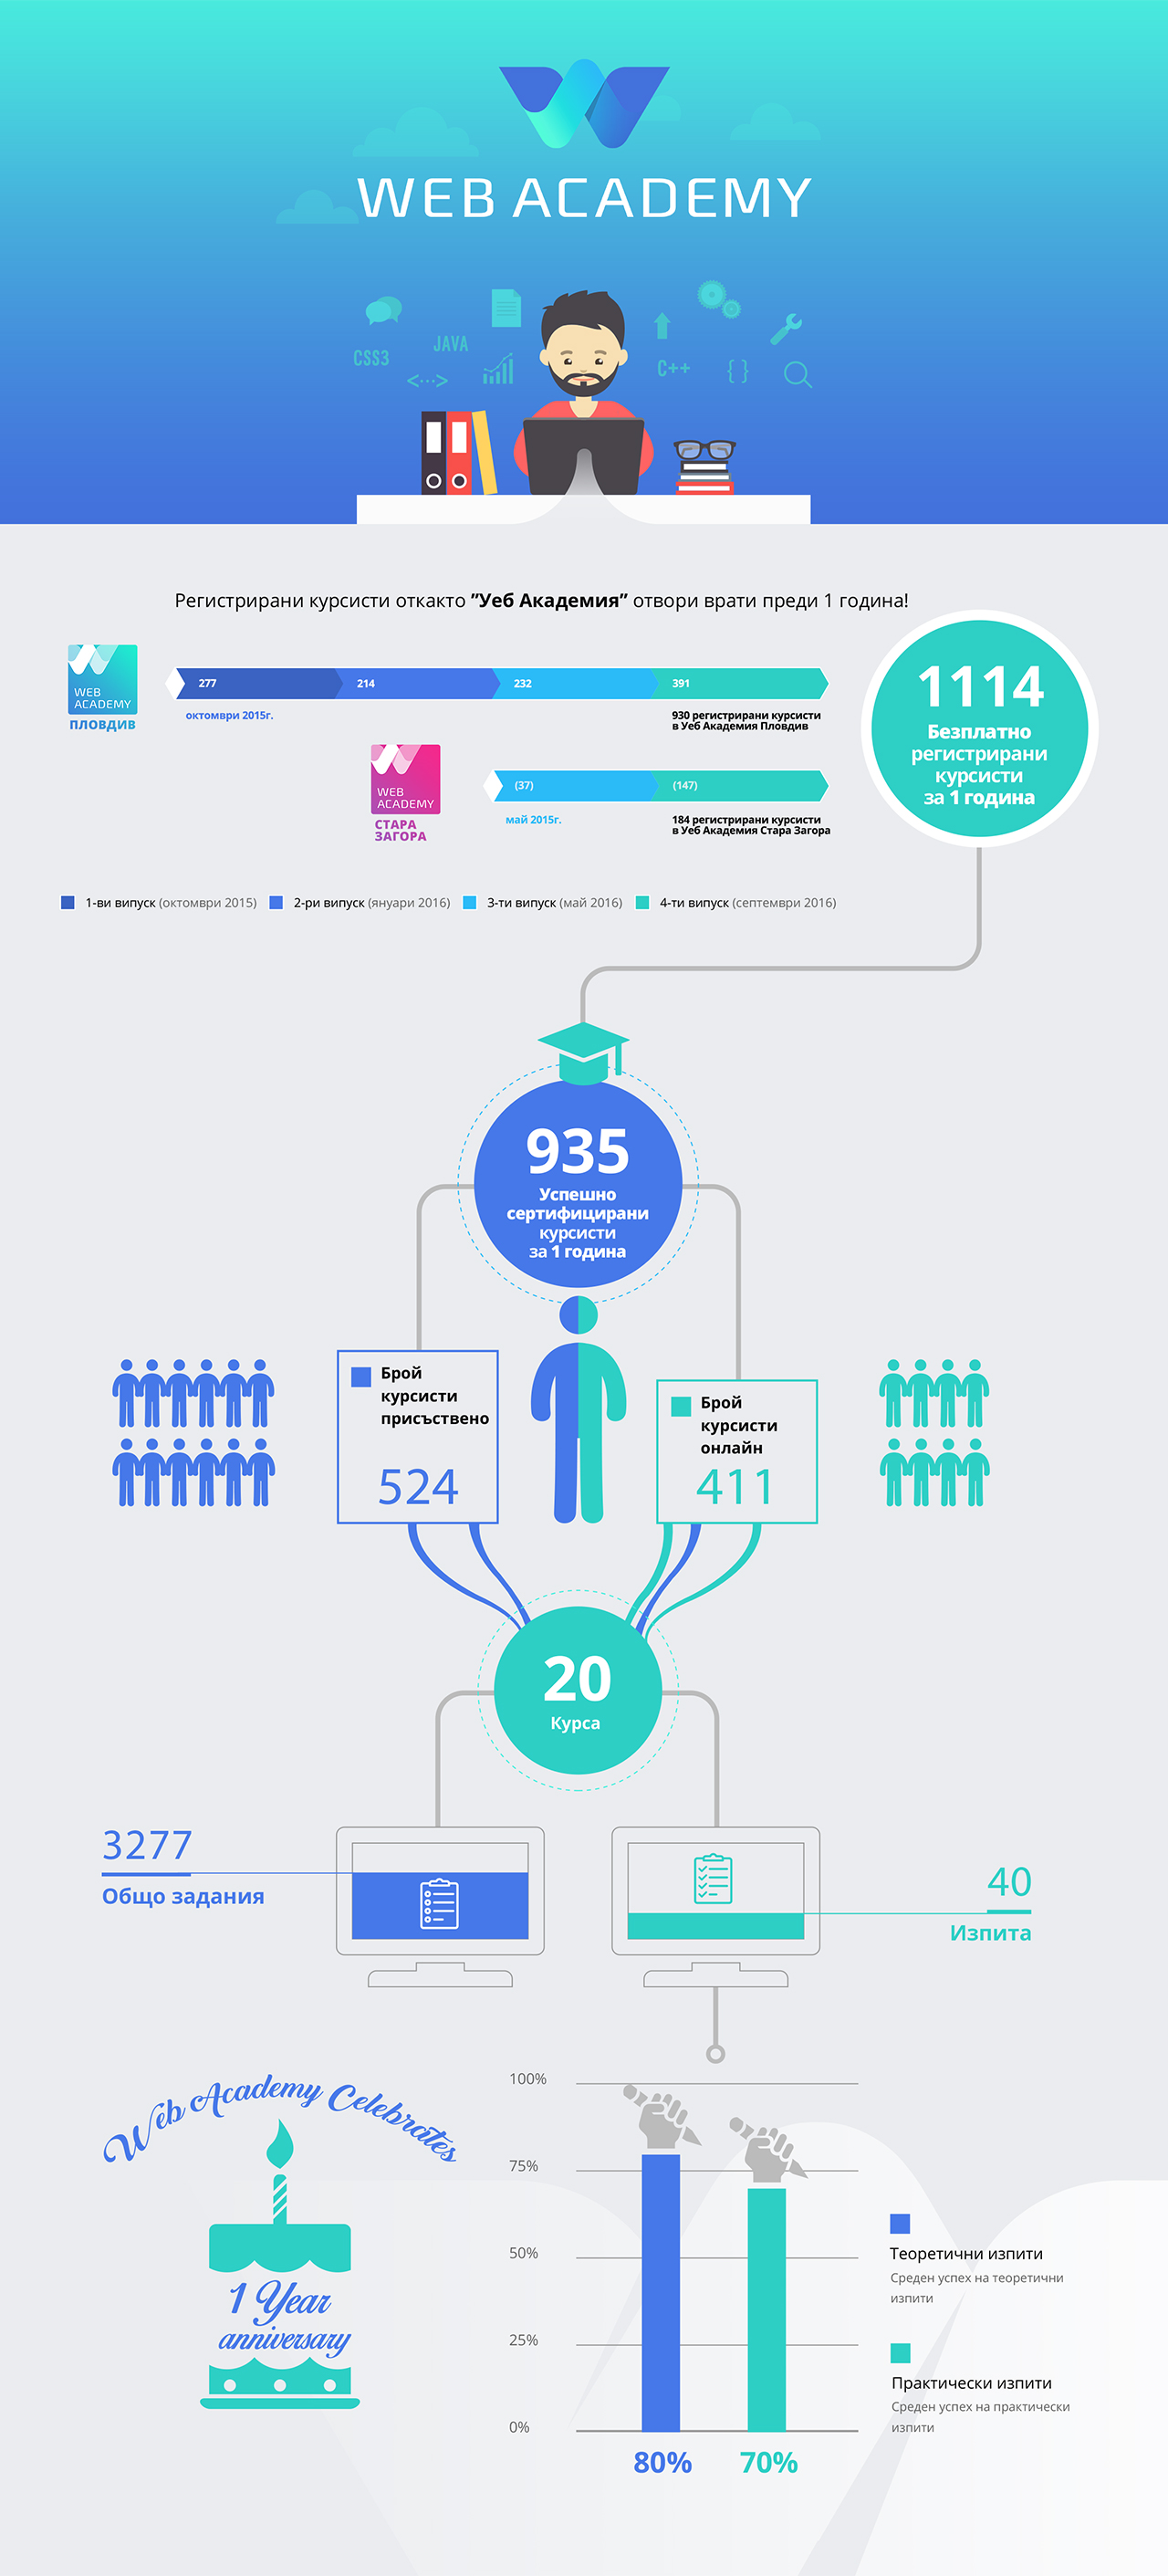 webacademy 1 year infographic